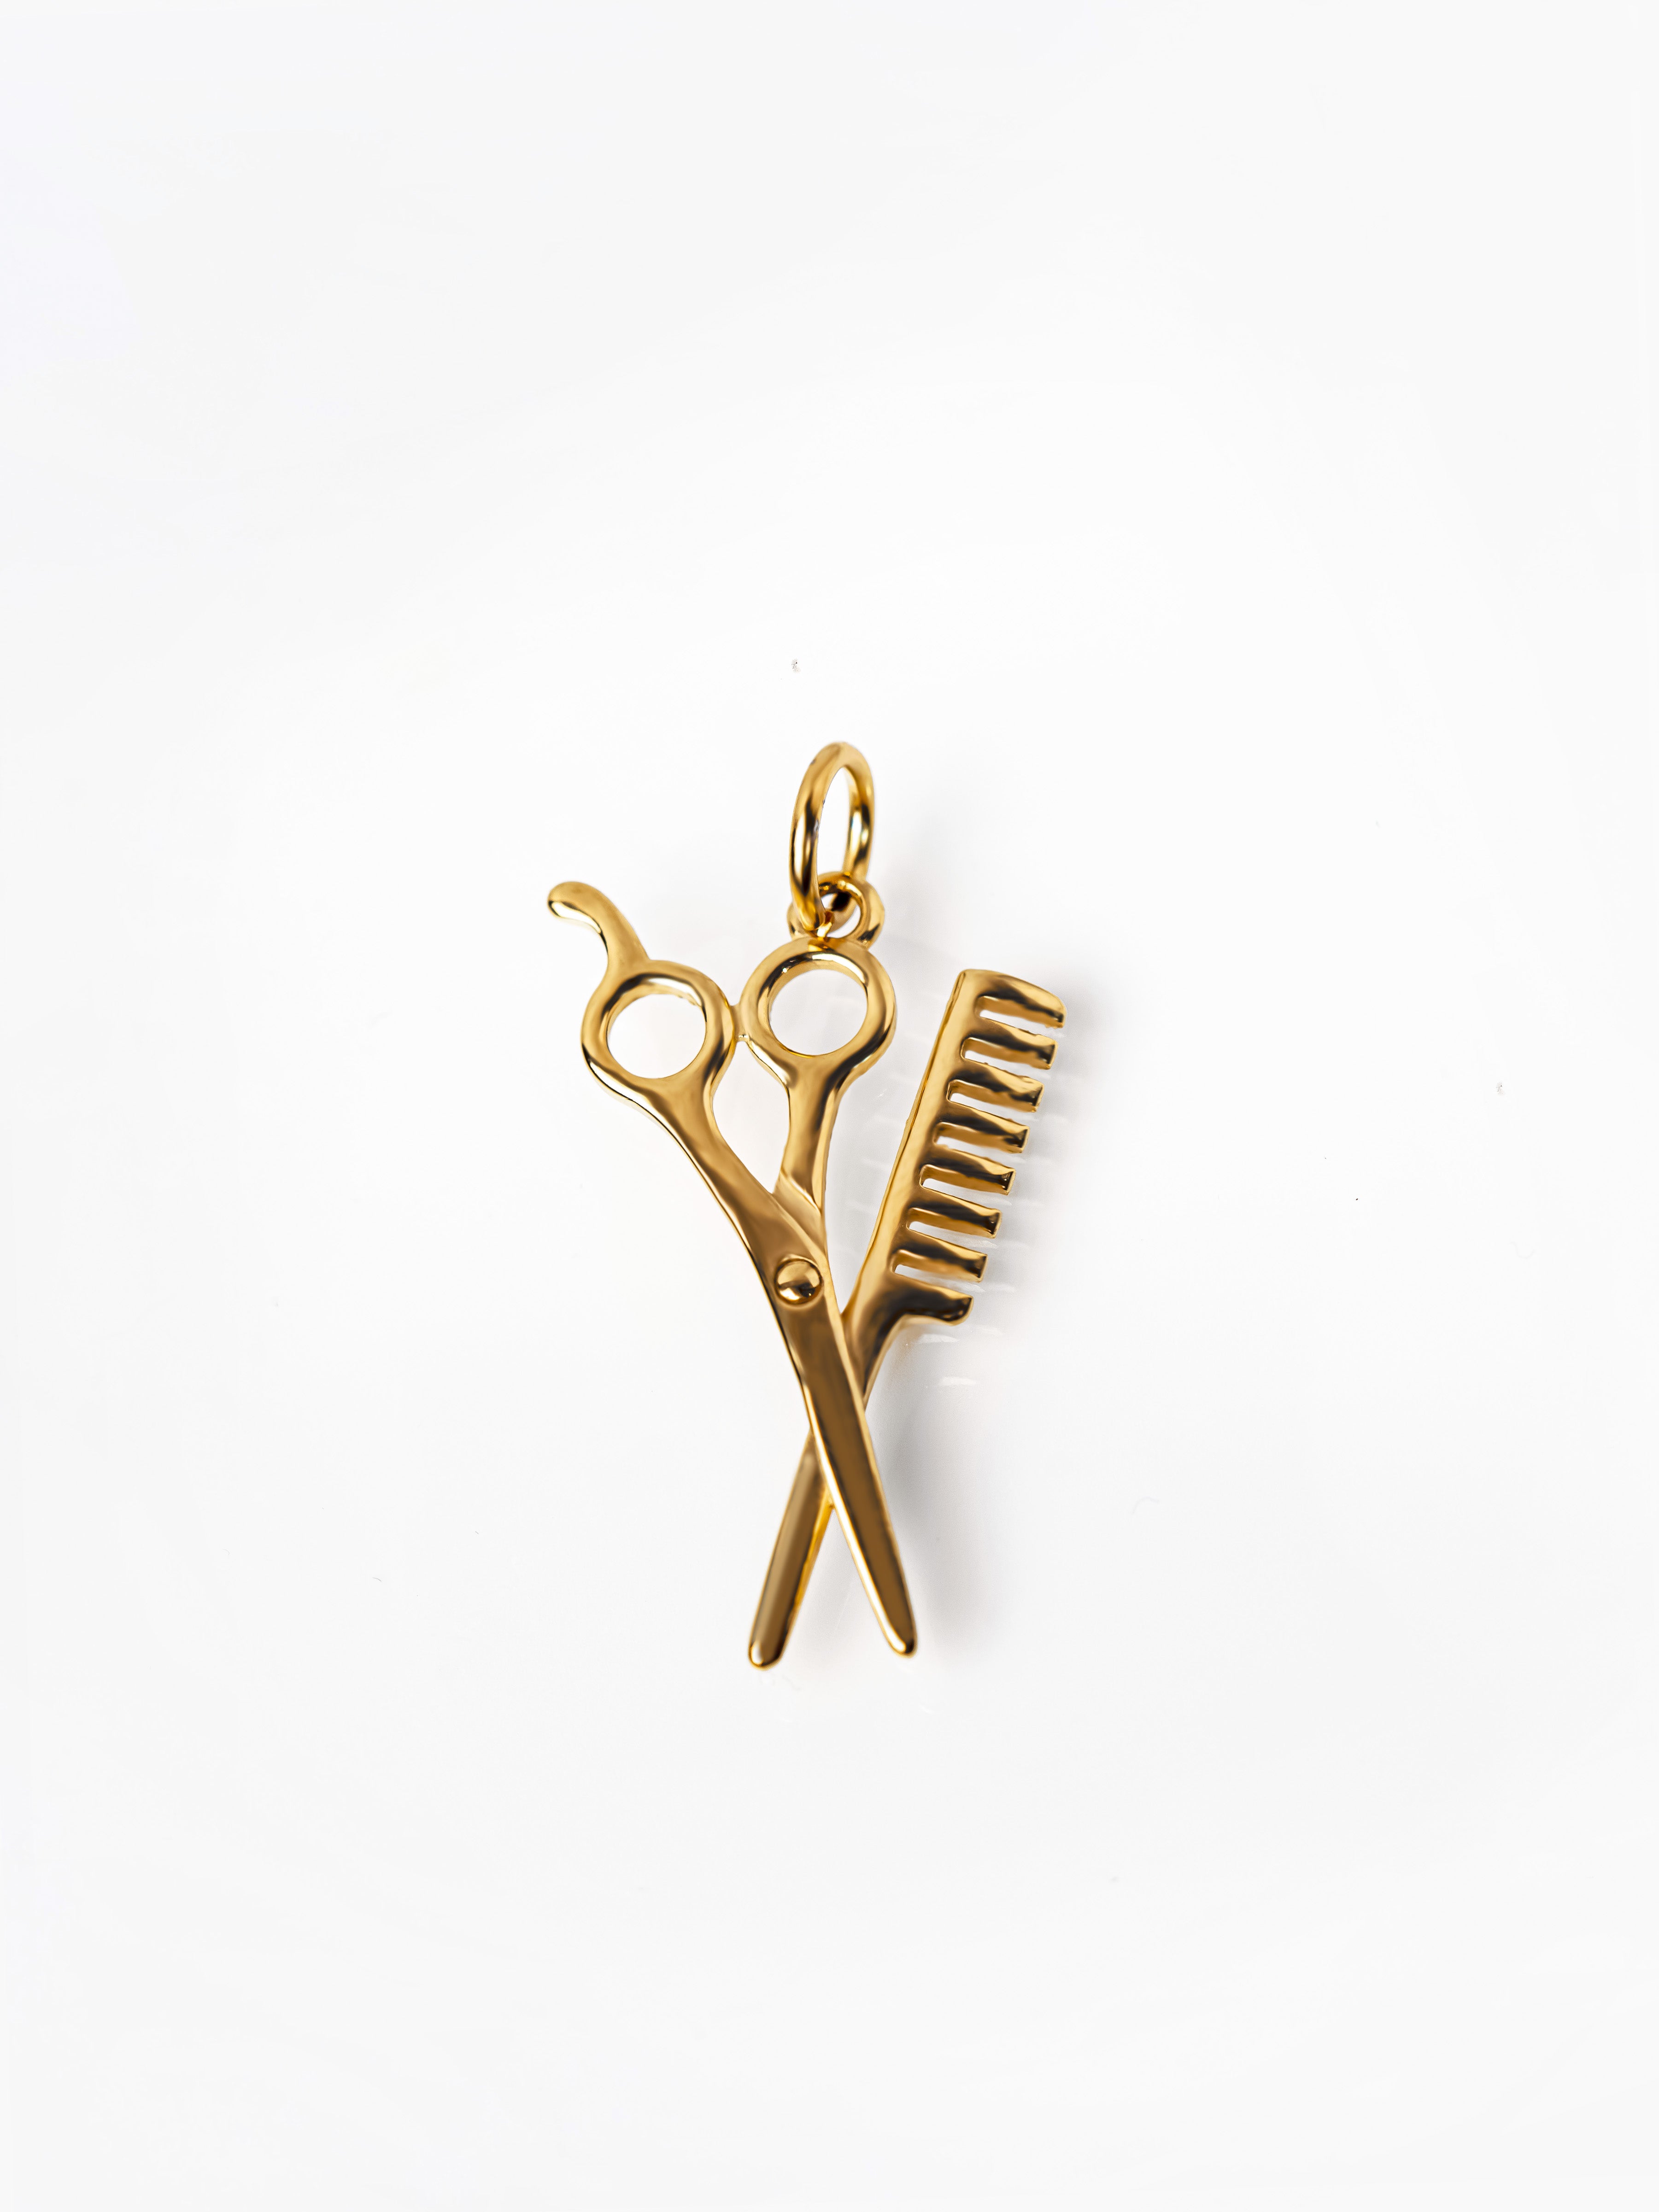 Gold Hairdresser Scissors & Comb Pendant / Charm